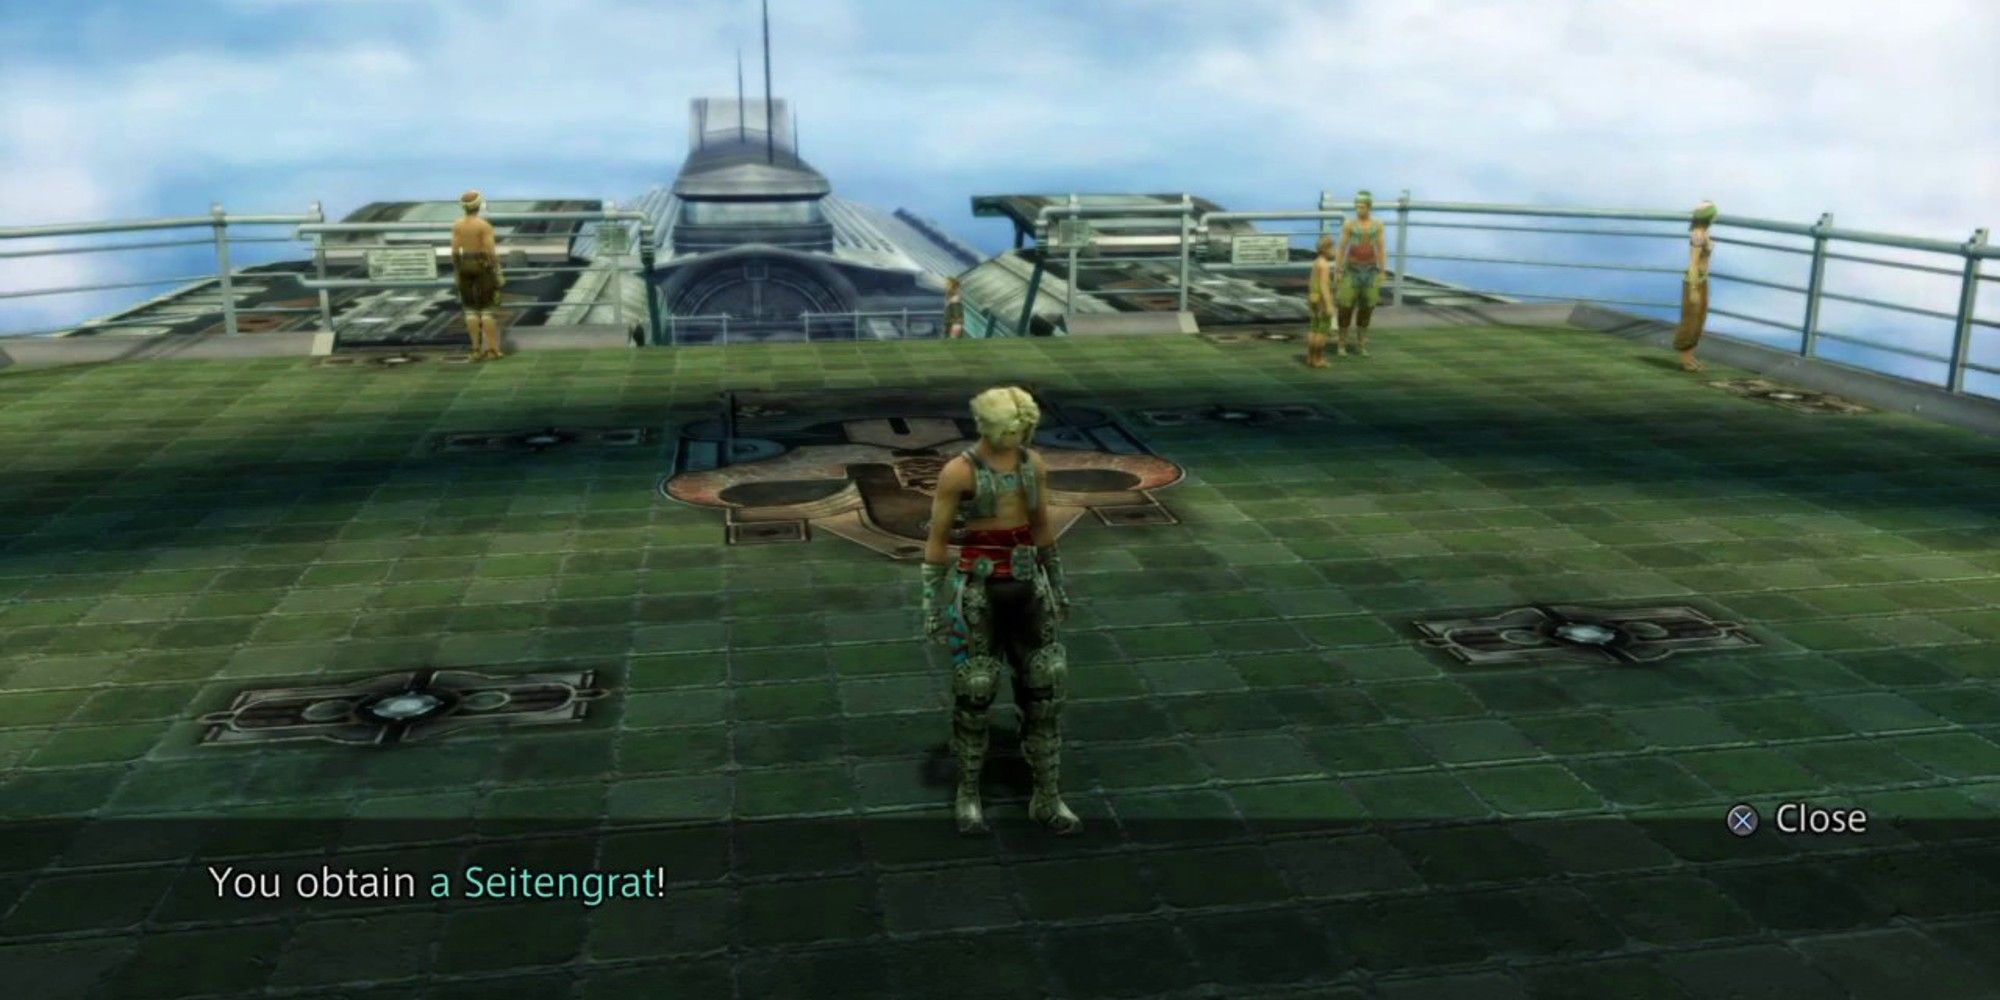 Seitangurat Found in Skyferry's Invisible Chest - Final Fantasy 12